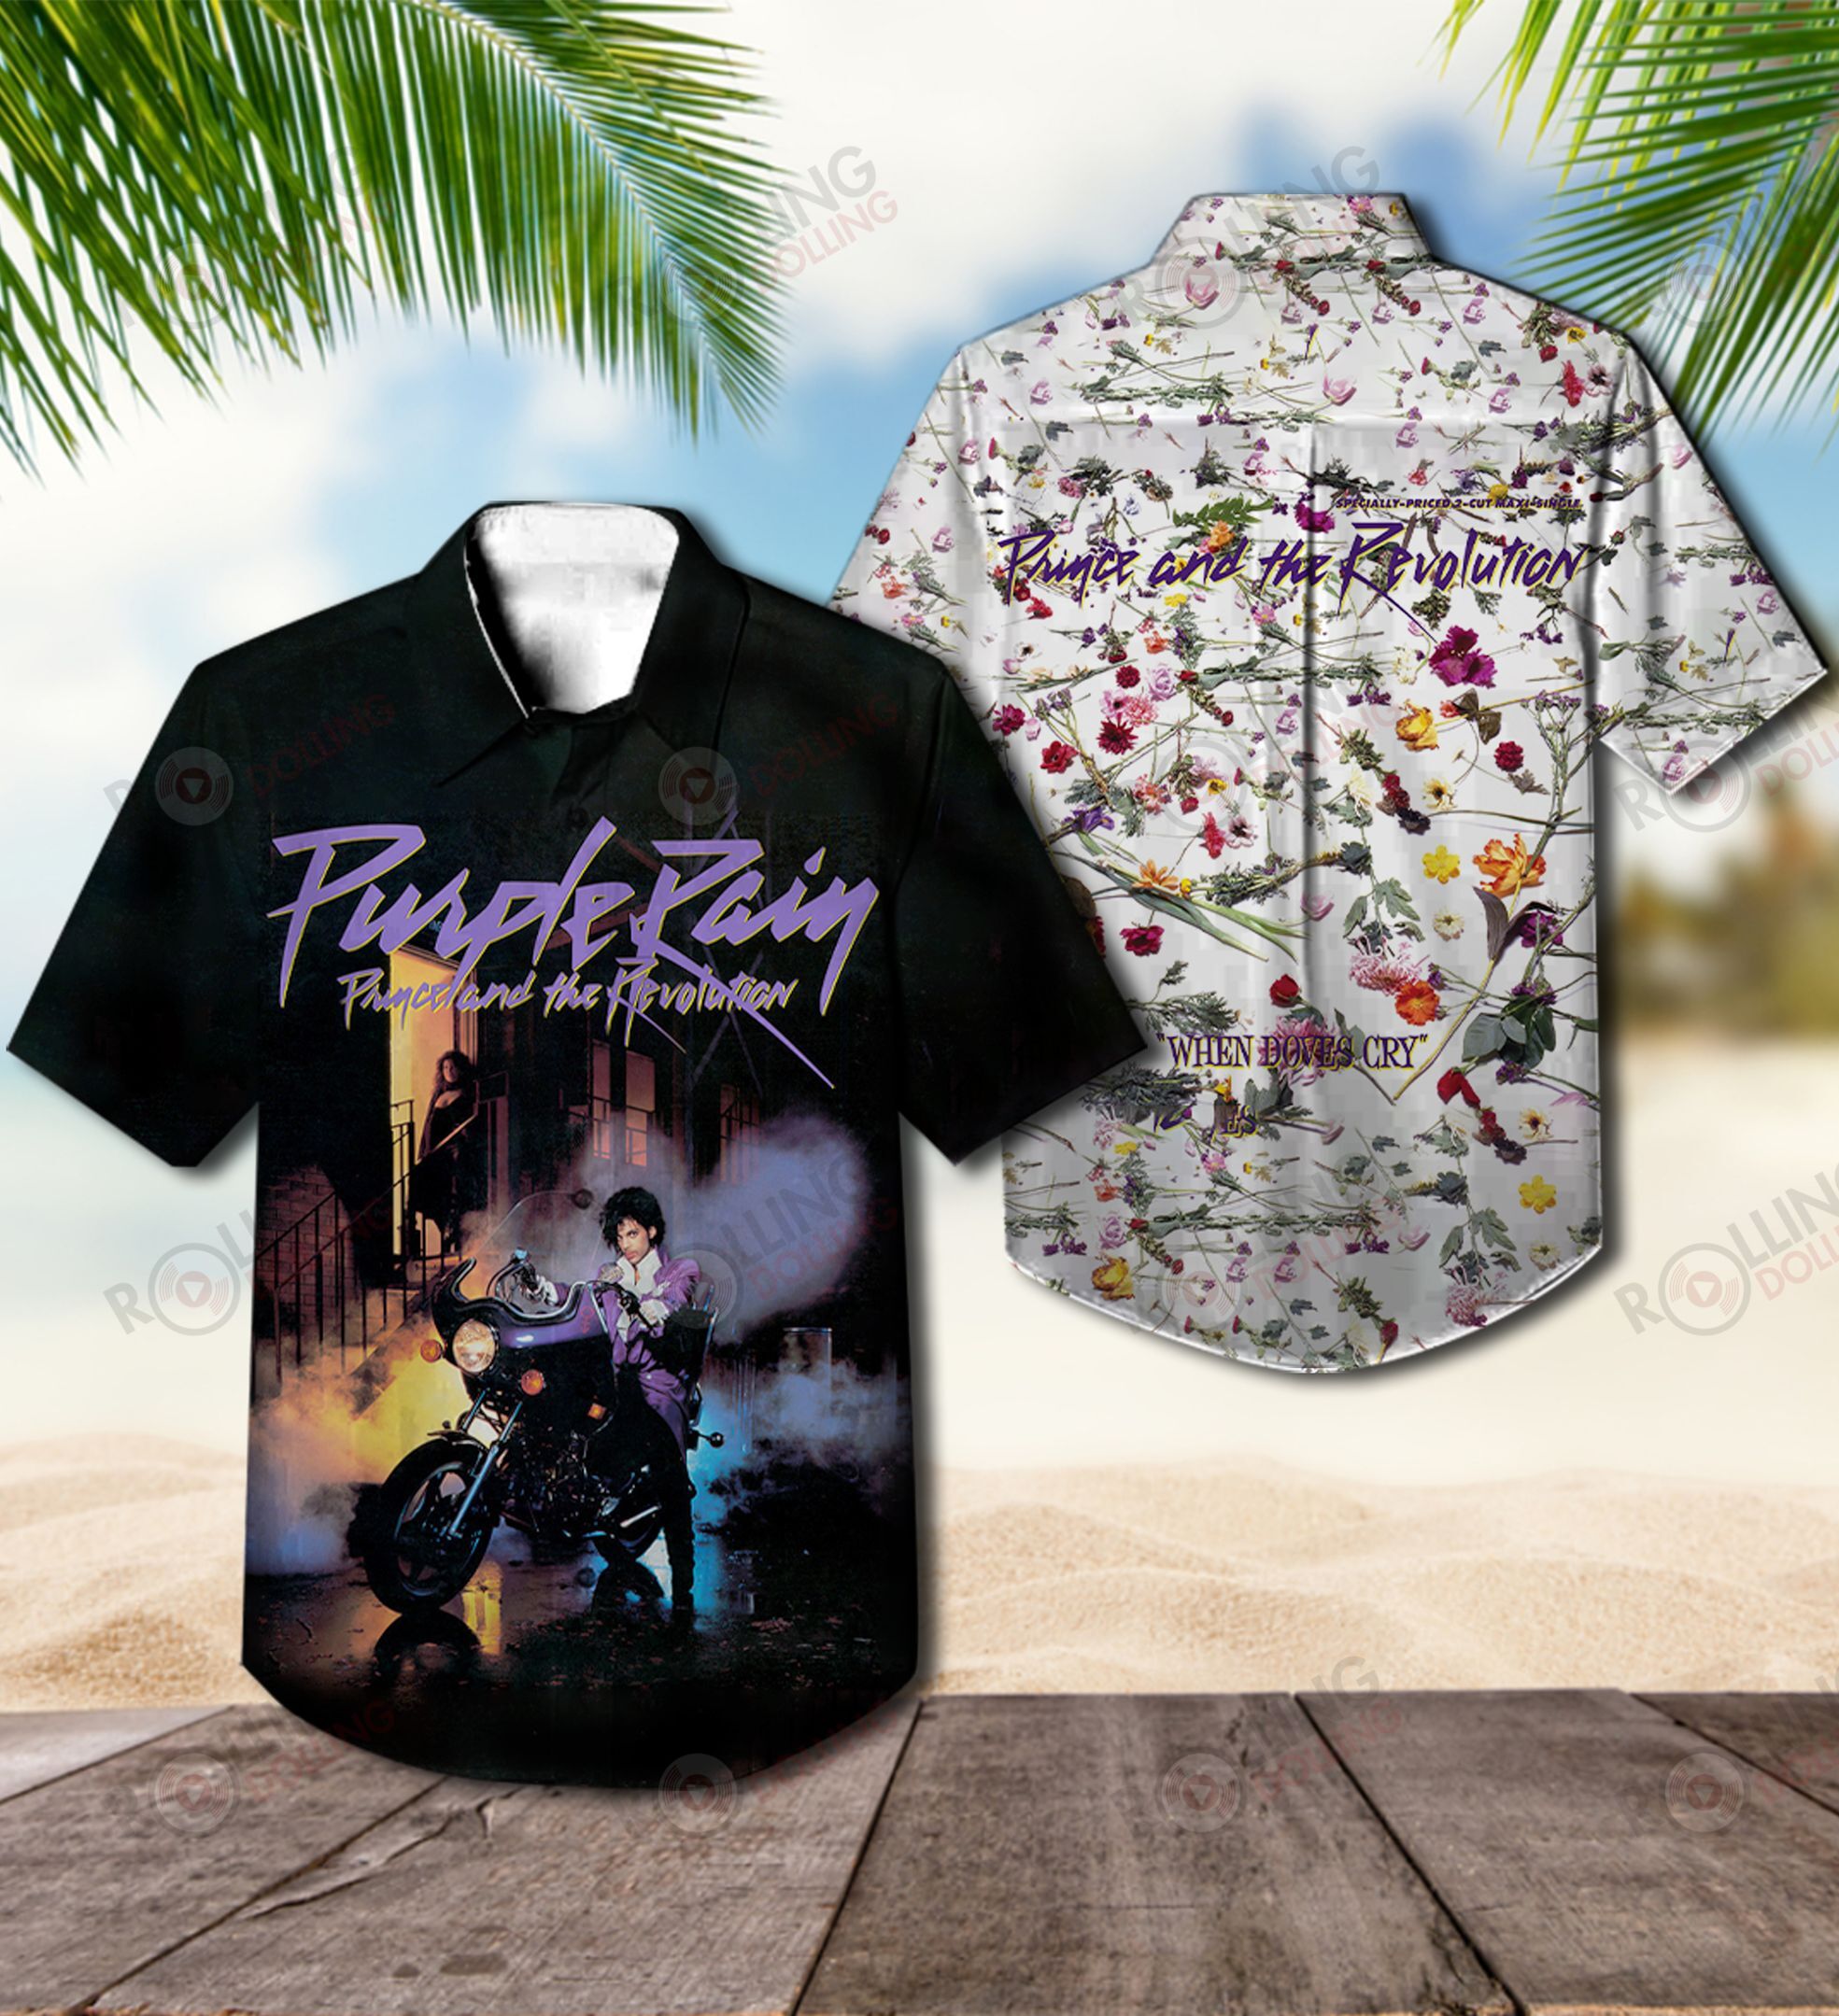 Regardless of their style, you will feel comfortable wearing Hawaiian Shirt 107